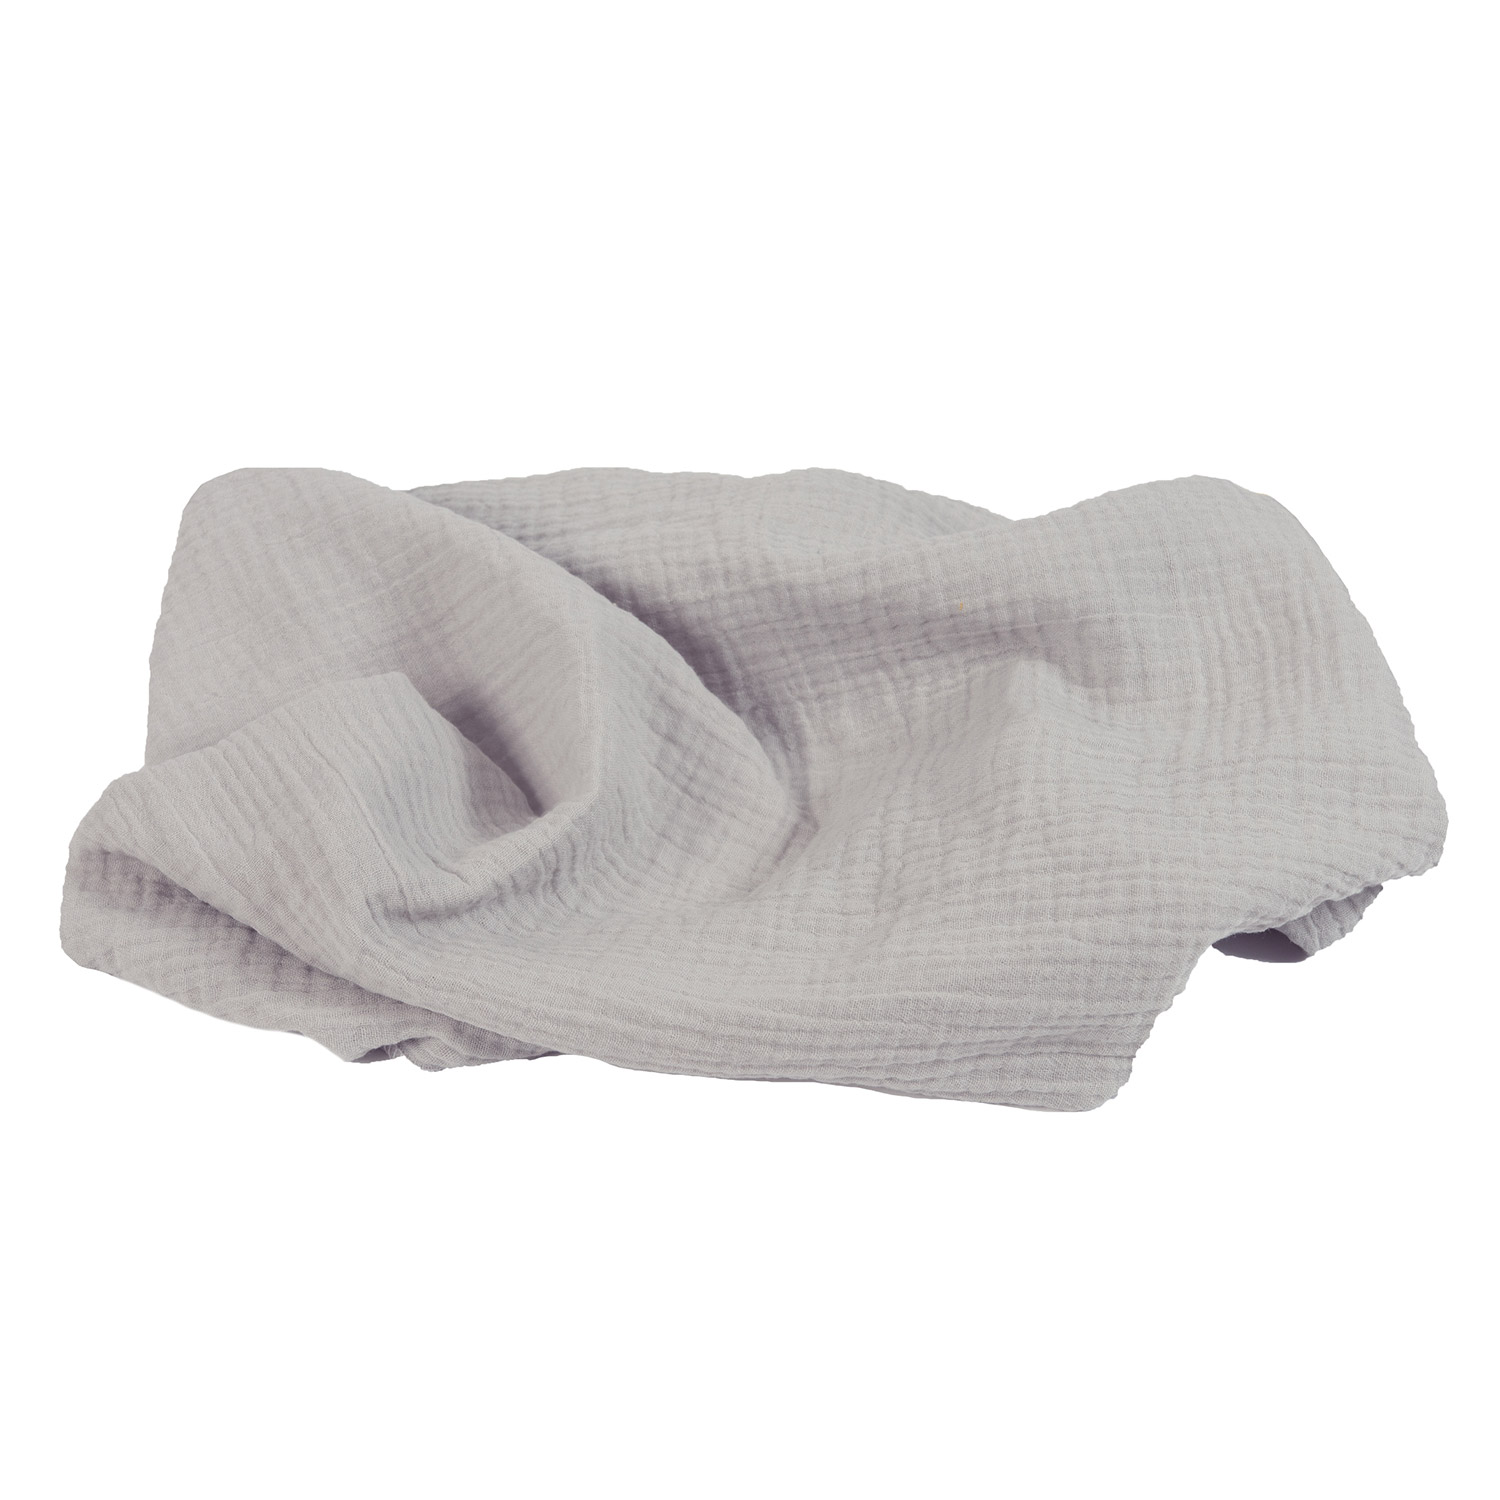 MUSLIN swaddle blanket - light gray - 80x120 cm